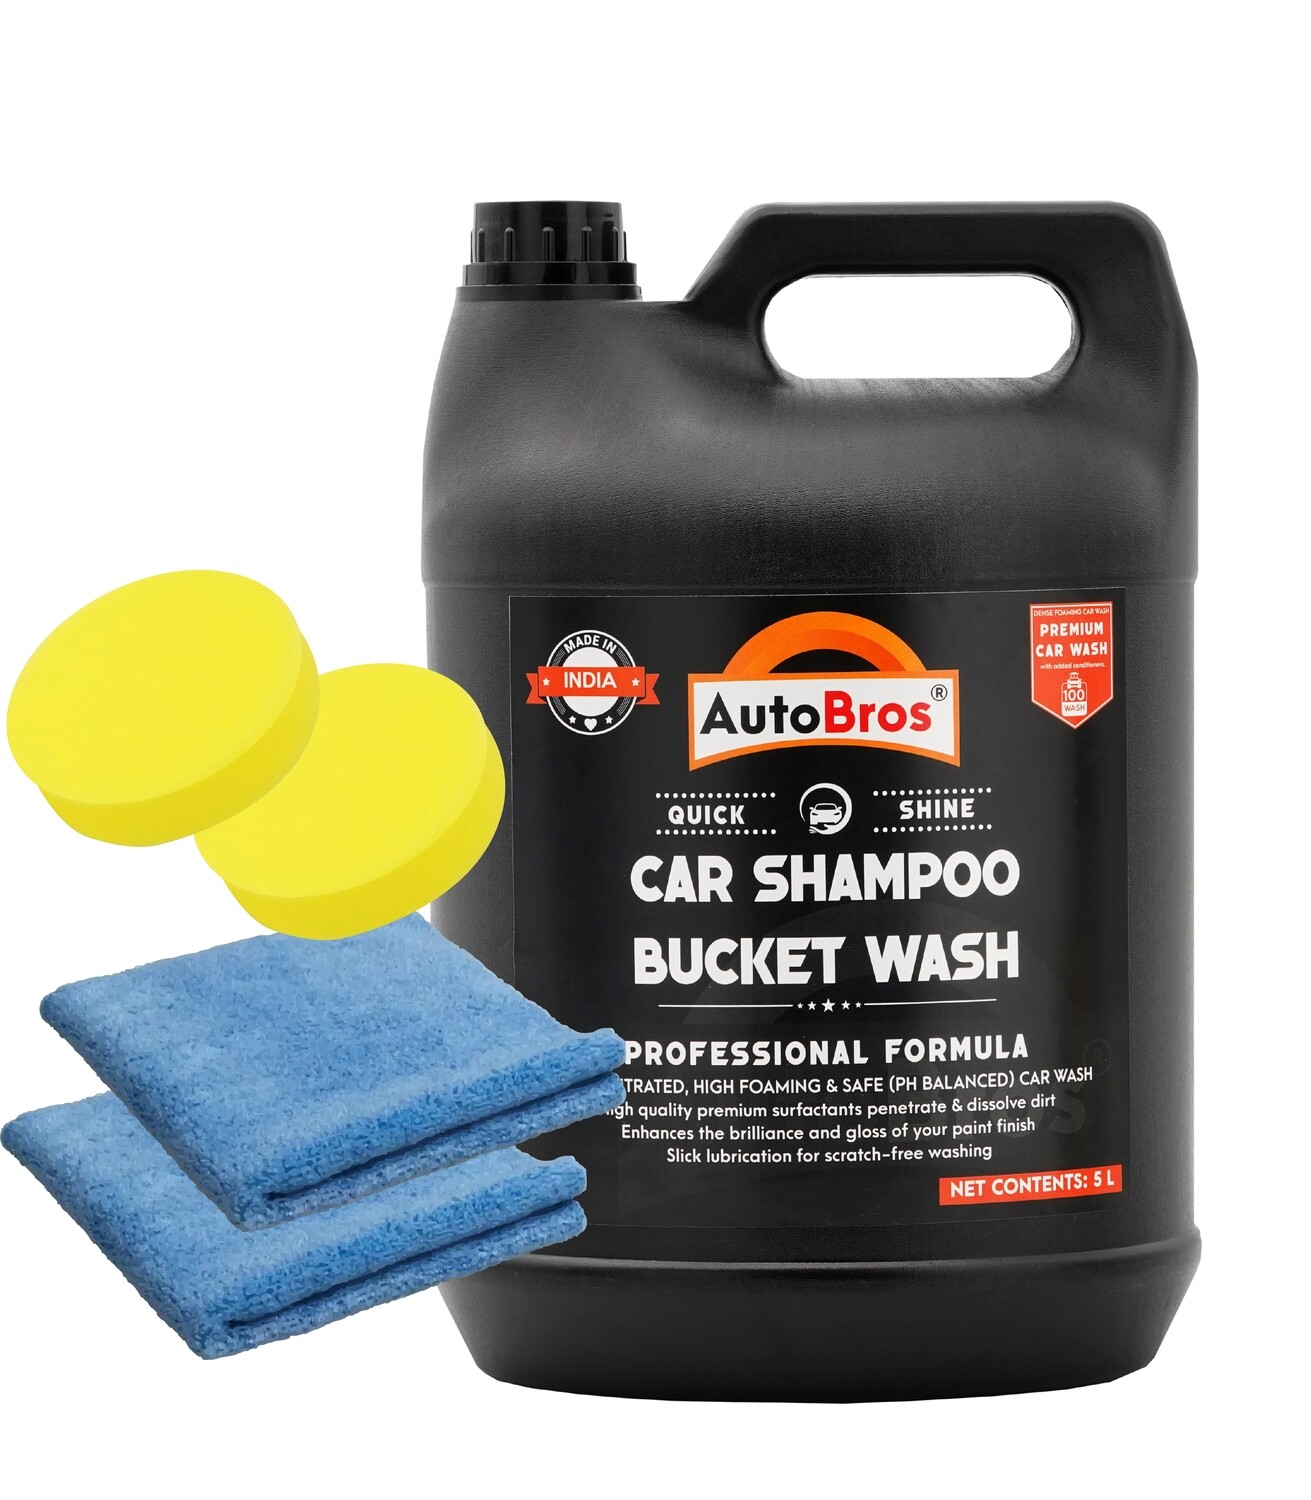 Bucket Wash: Car Shampoo with 2 Microfiber Cloth and 2 Foam Pad Applicator